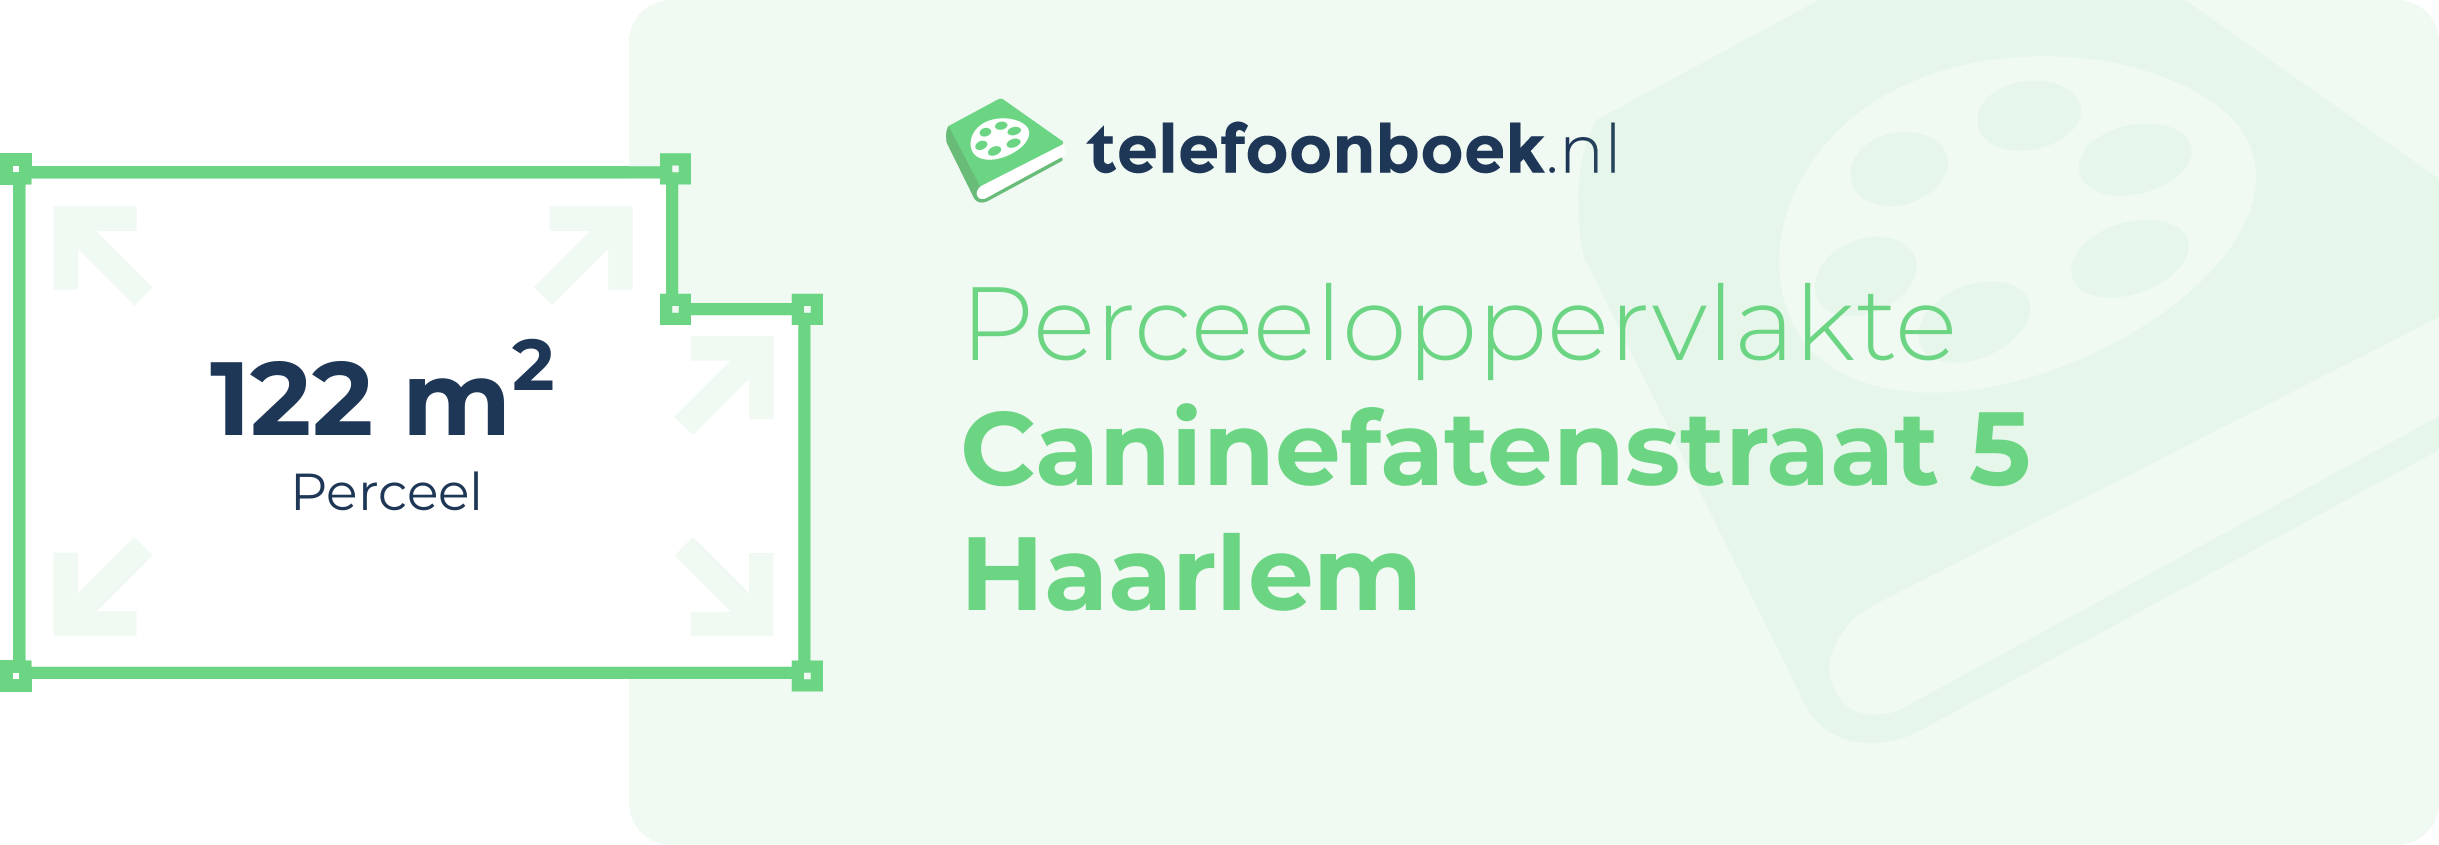 Perceeloppervlakte Caninefatenstraat 5 Haarlem